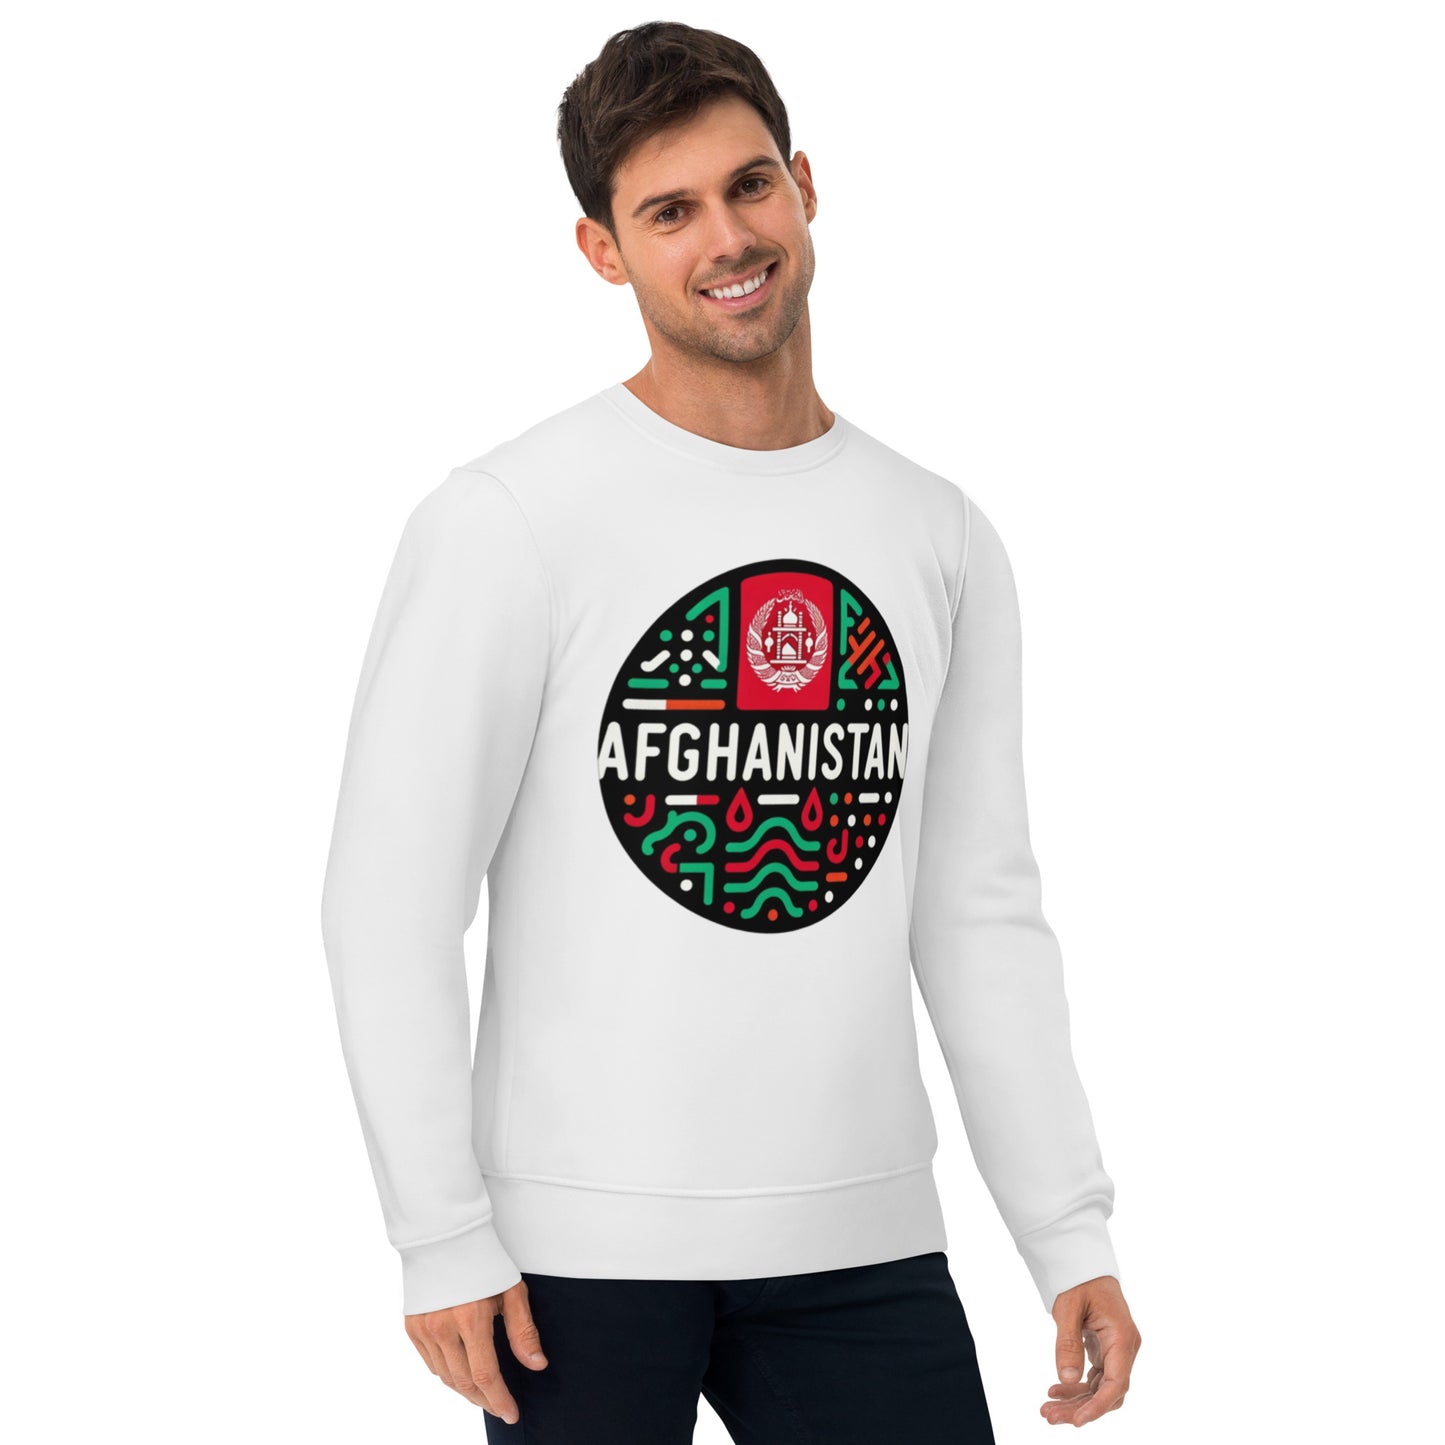 FE031 - Unisex Bio-Pullover - Sweater - Sweatshirt - Free Afghanistan 1